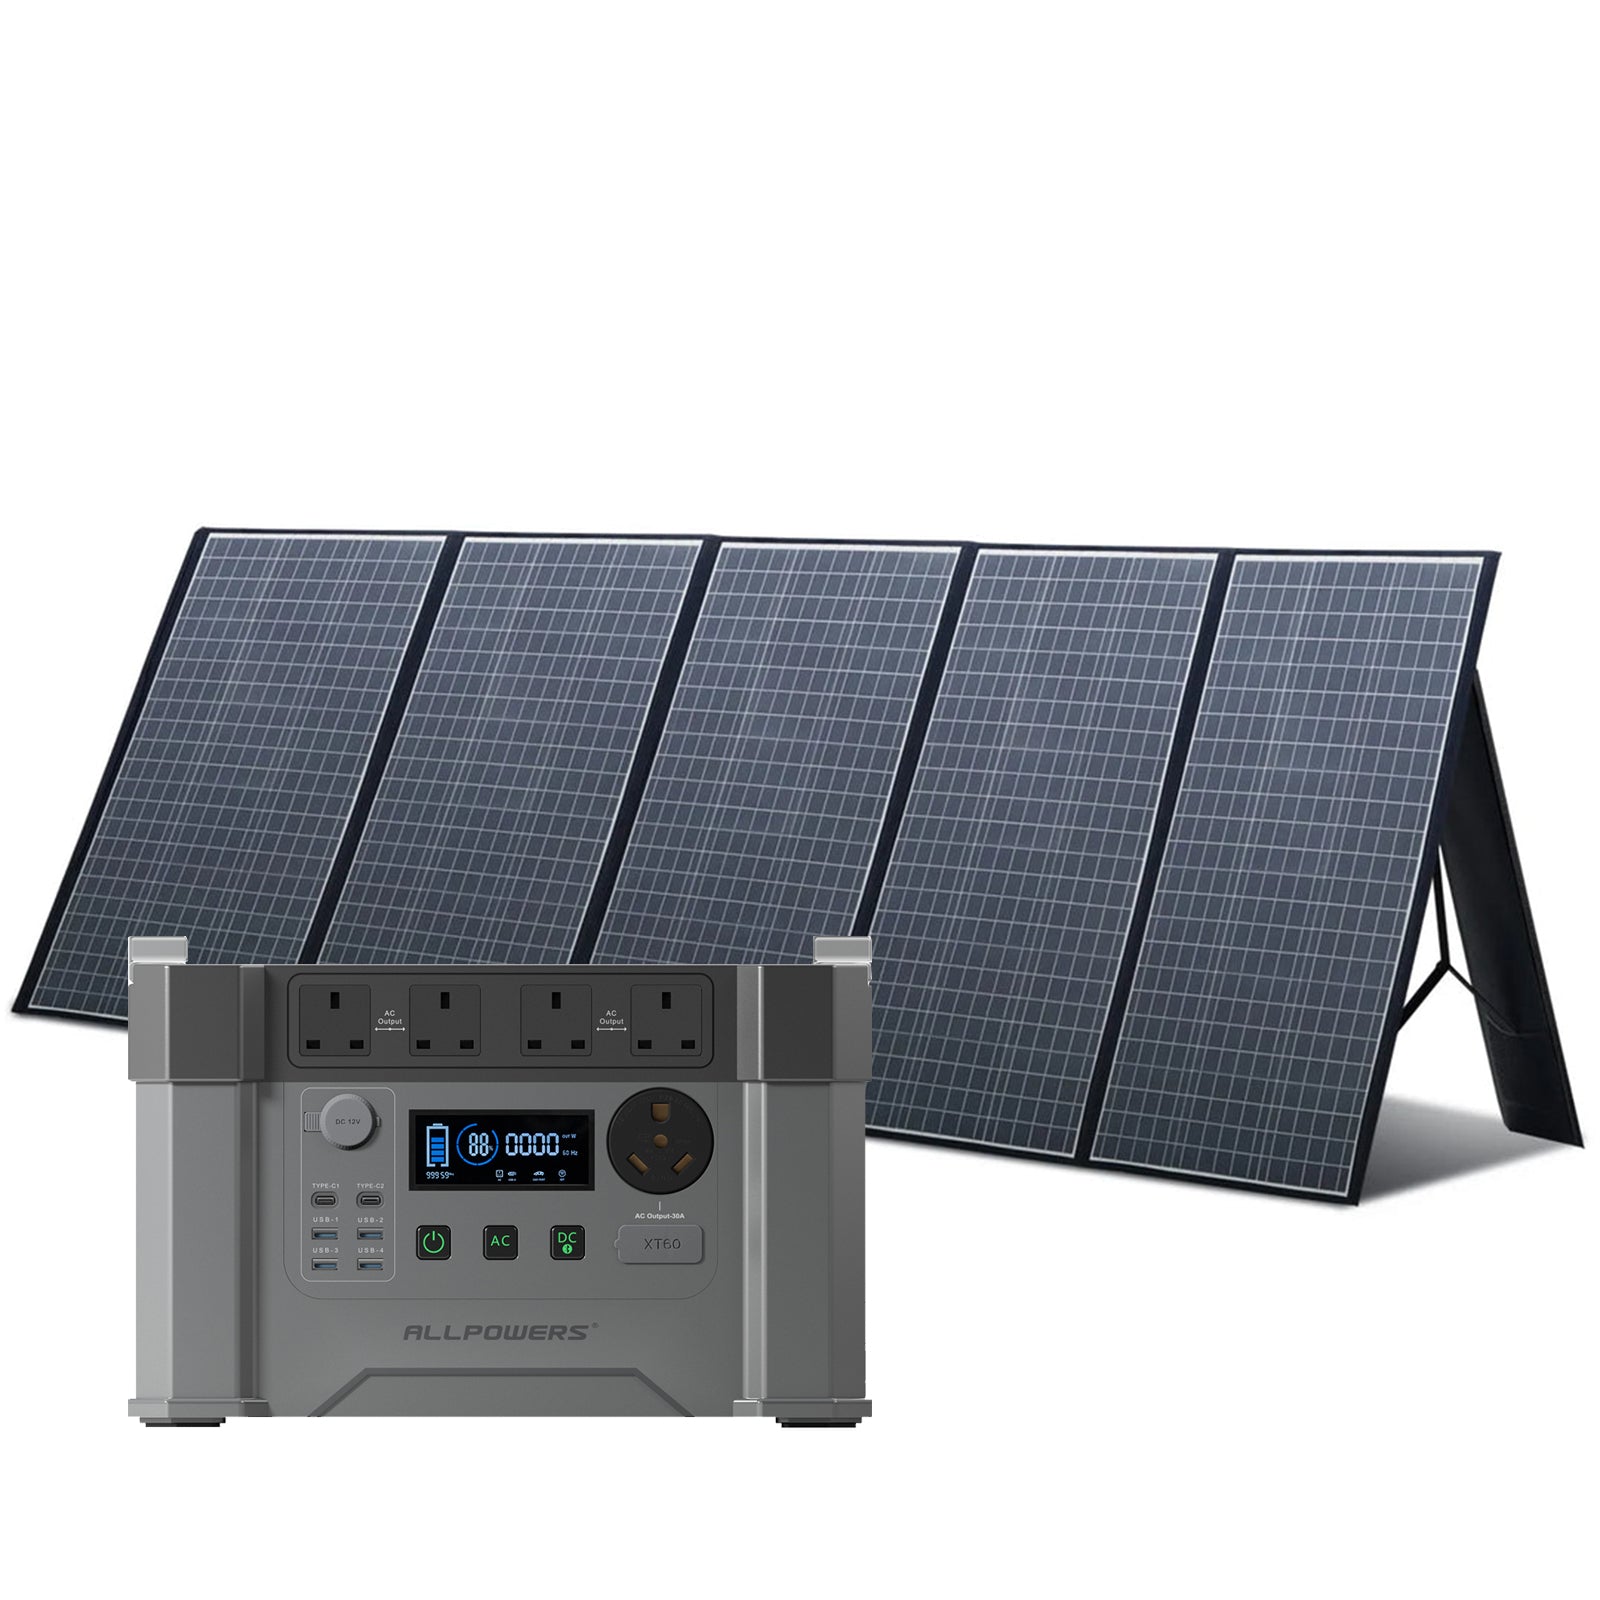 ALLPOWERS Solar Generator 2400W (S2000 Pro + SP037 400W Solar Panel)